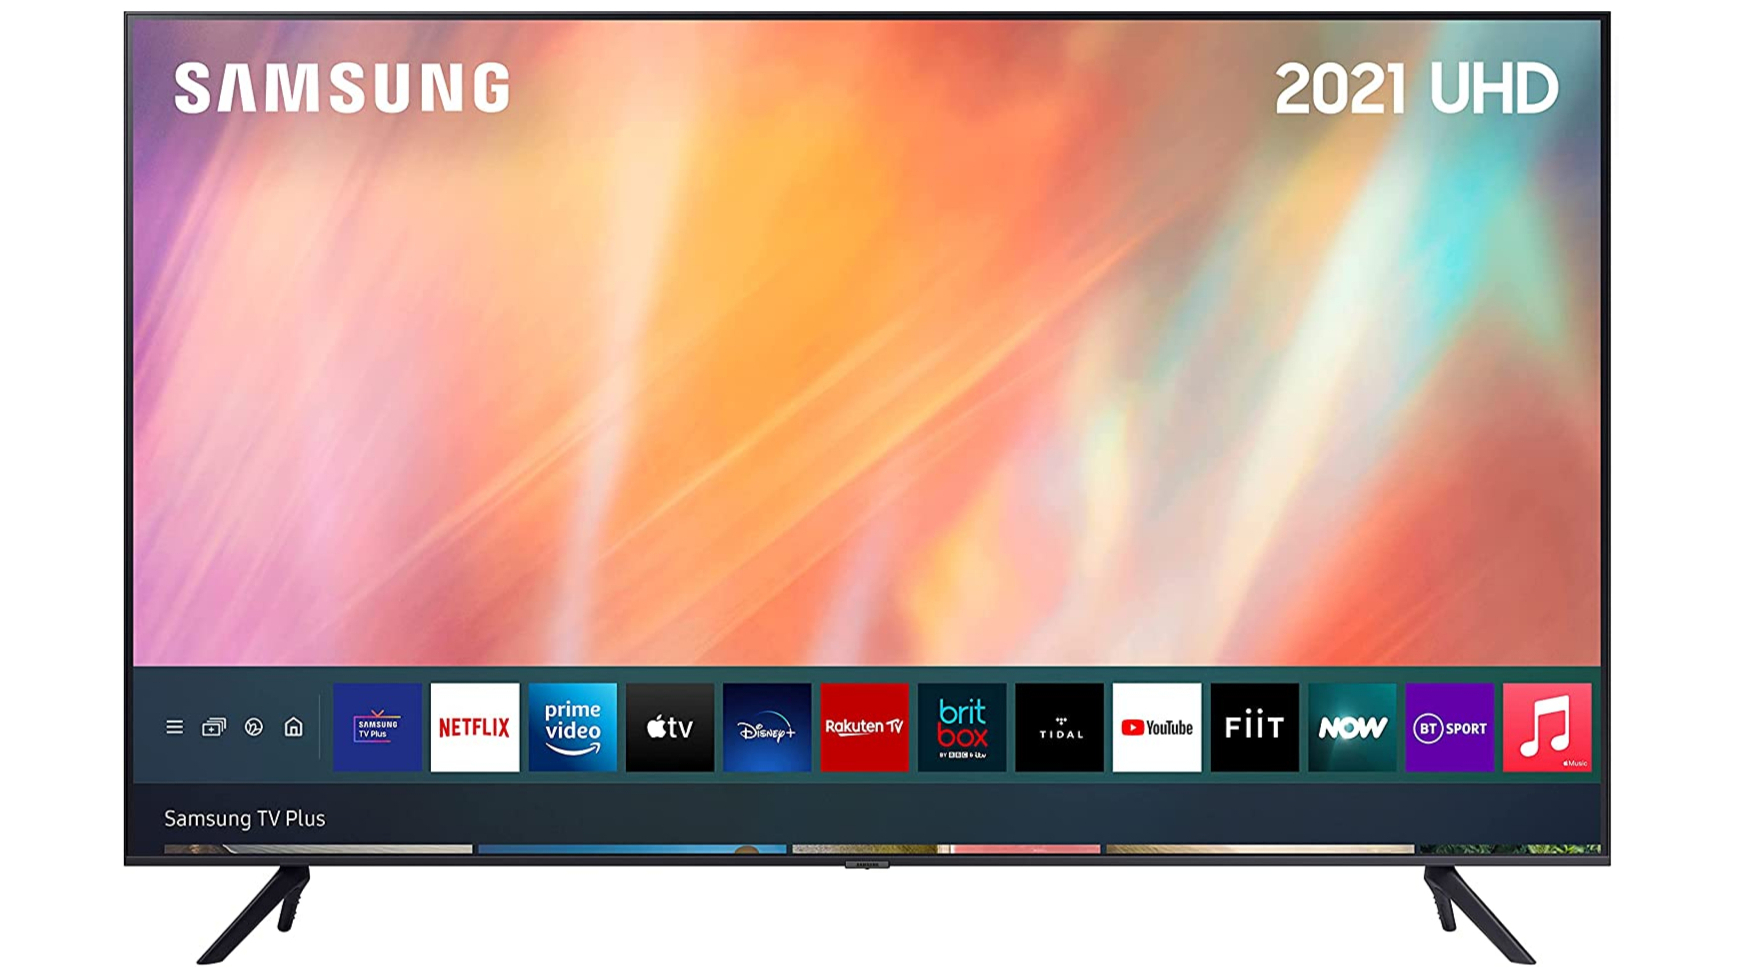 Samsung 4K HDR TV